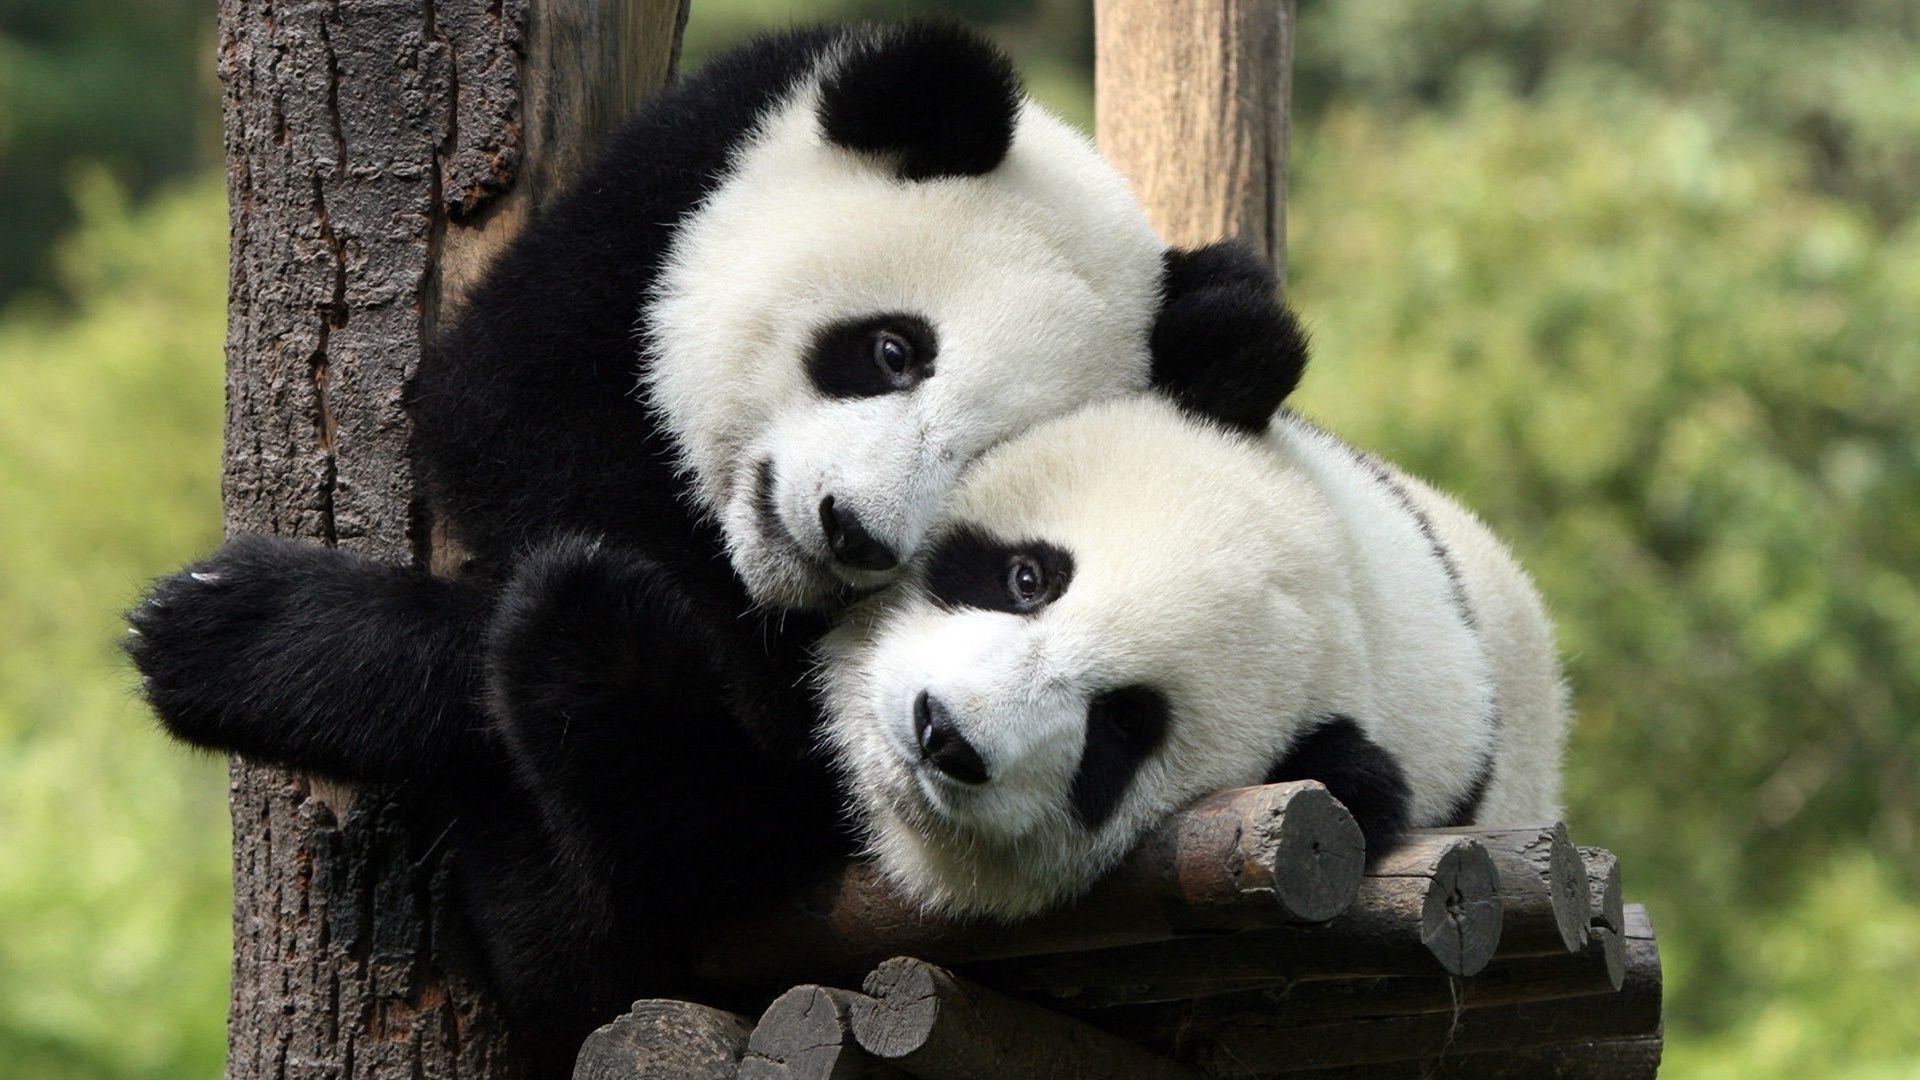 herbivores mammal wildlife zoo nature animal wild wood fur cute panda tree outdoors